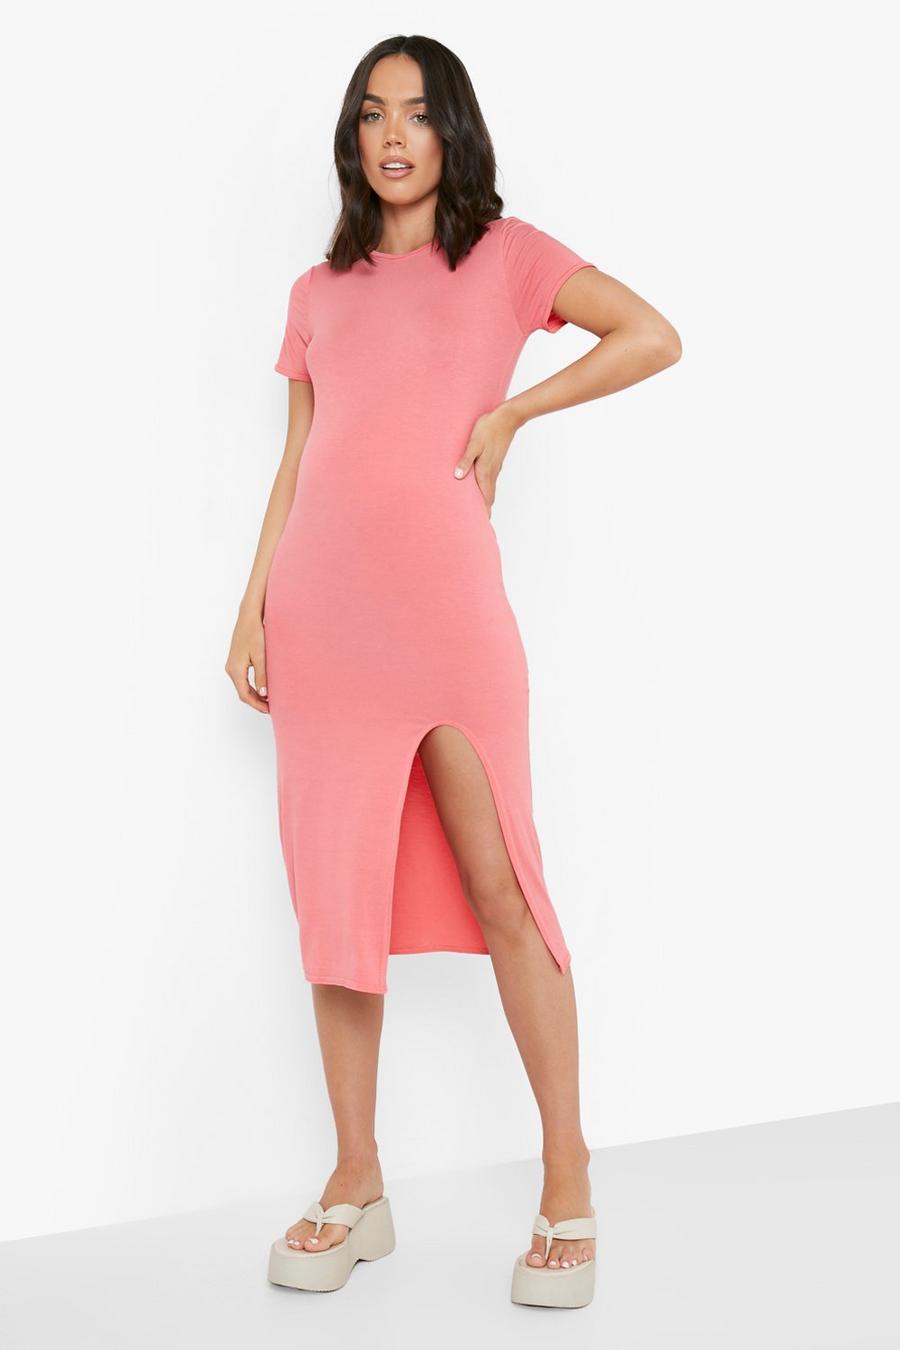 Coral pink Maternity Side Split Bodycon Midi Dress